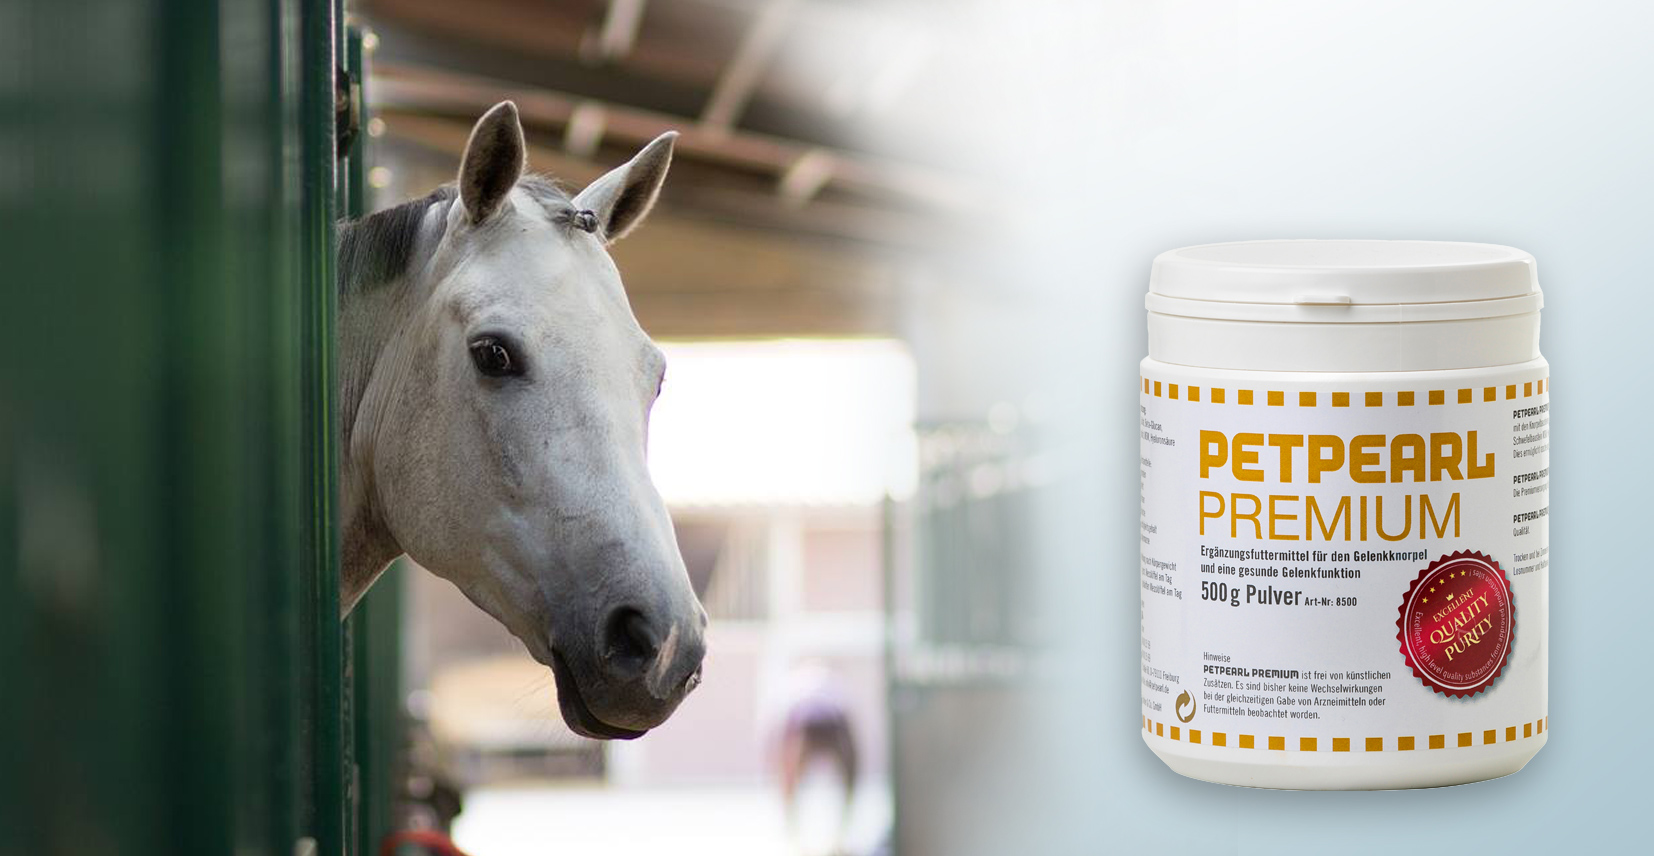 PETPEARL Vitalstoffe für Pferde & Hunde